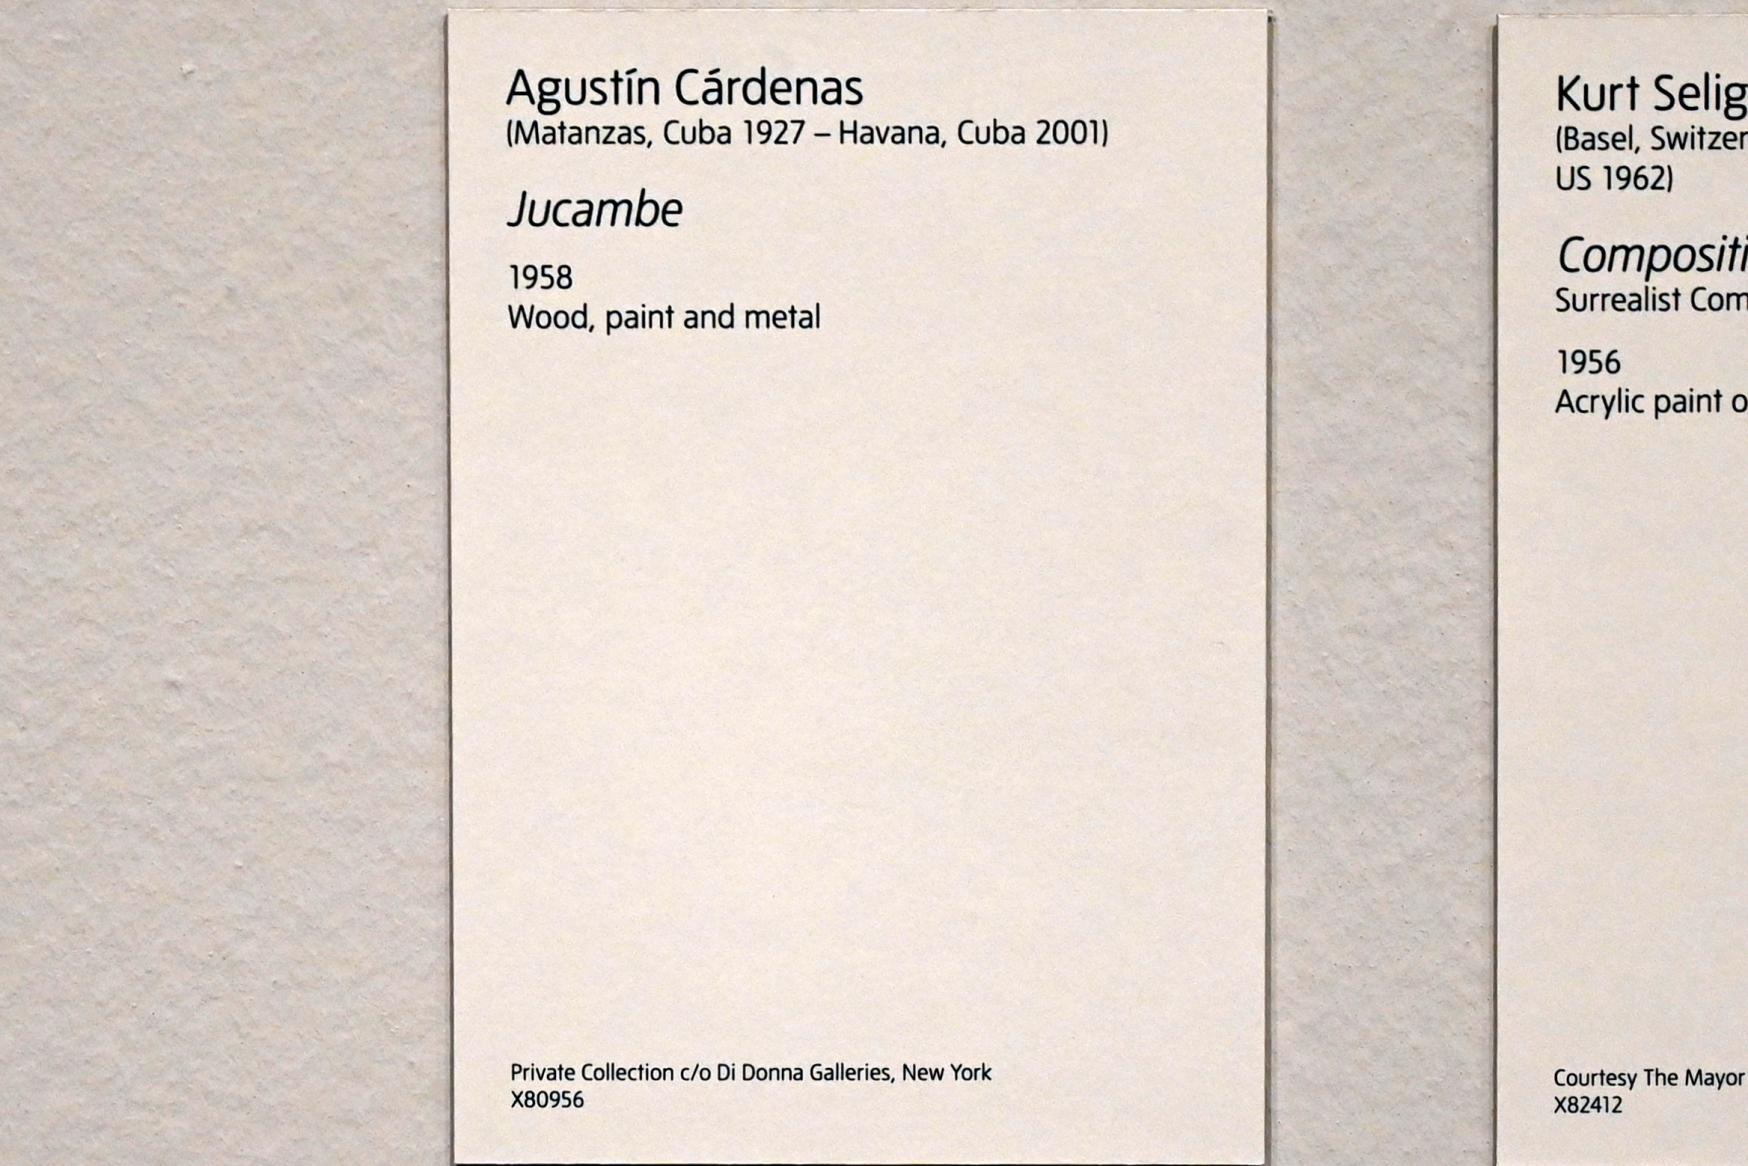 Agustín Cárdenas (1958), Jucambe, London, Tate Modern, Ausstellung "Surrealism Beyond Borders" vom 24.02.-29.08.2022, Saal 11, 1958, Bild 4/6